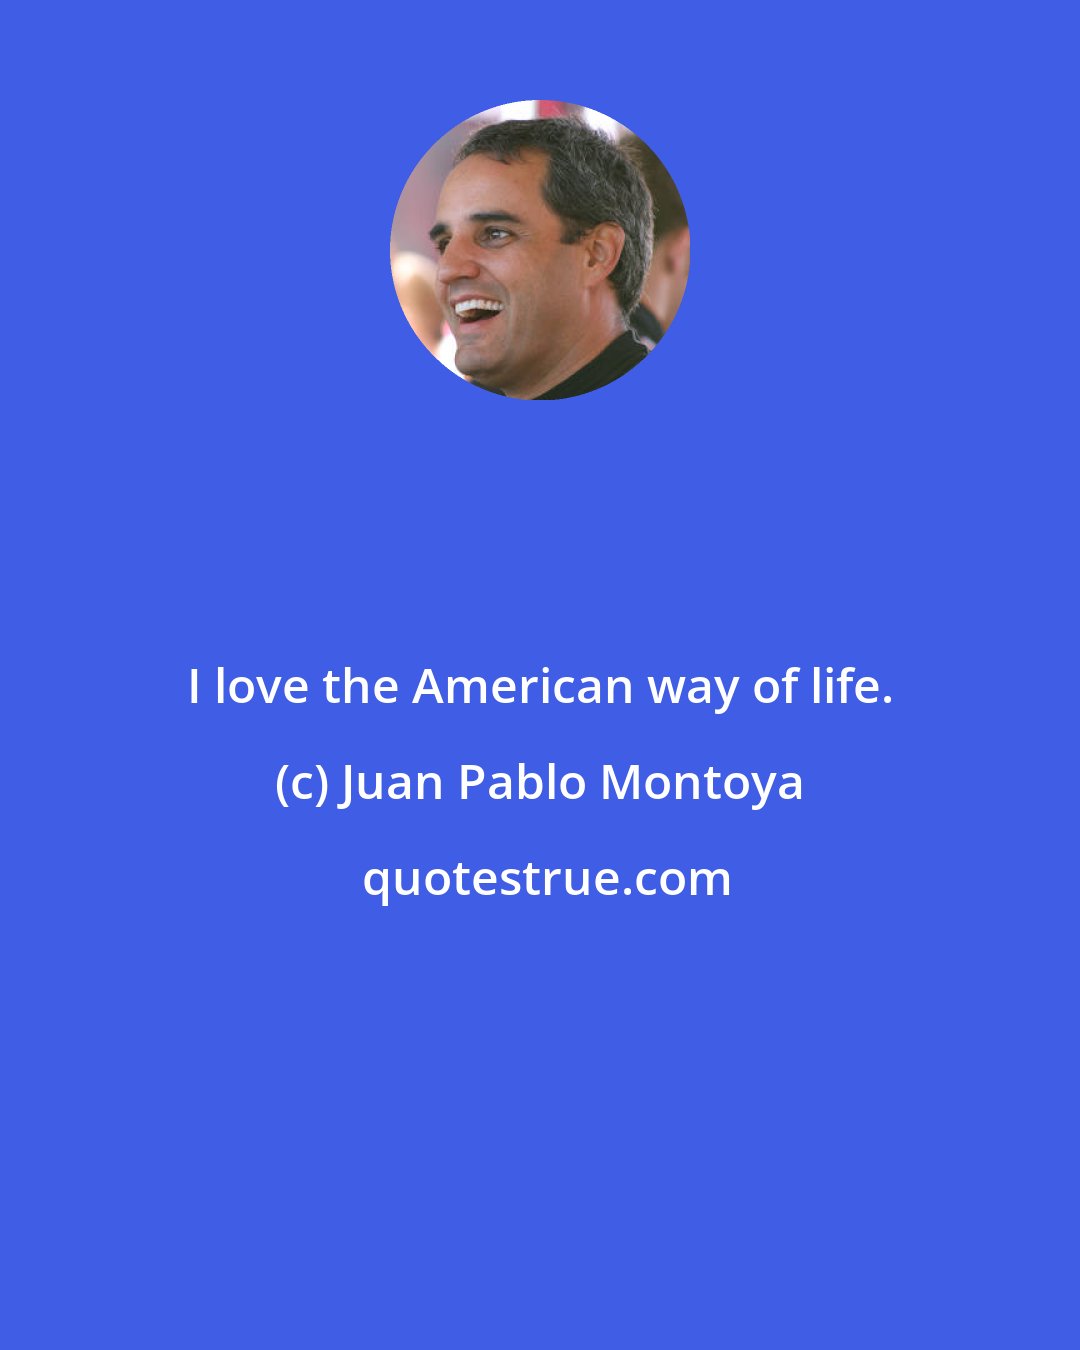 Juan Pablo Montoya: I love the American way of life.